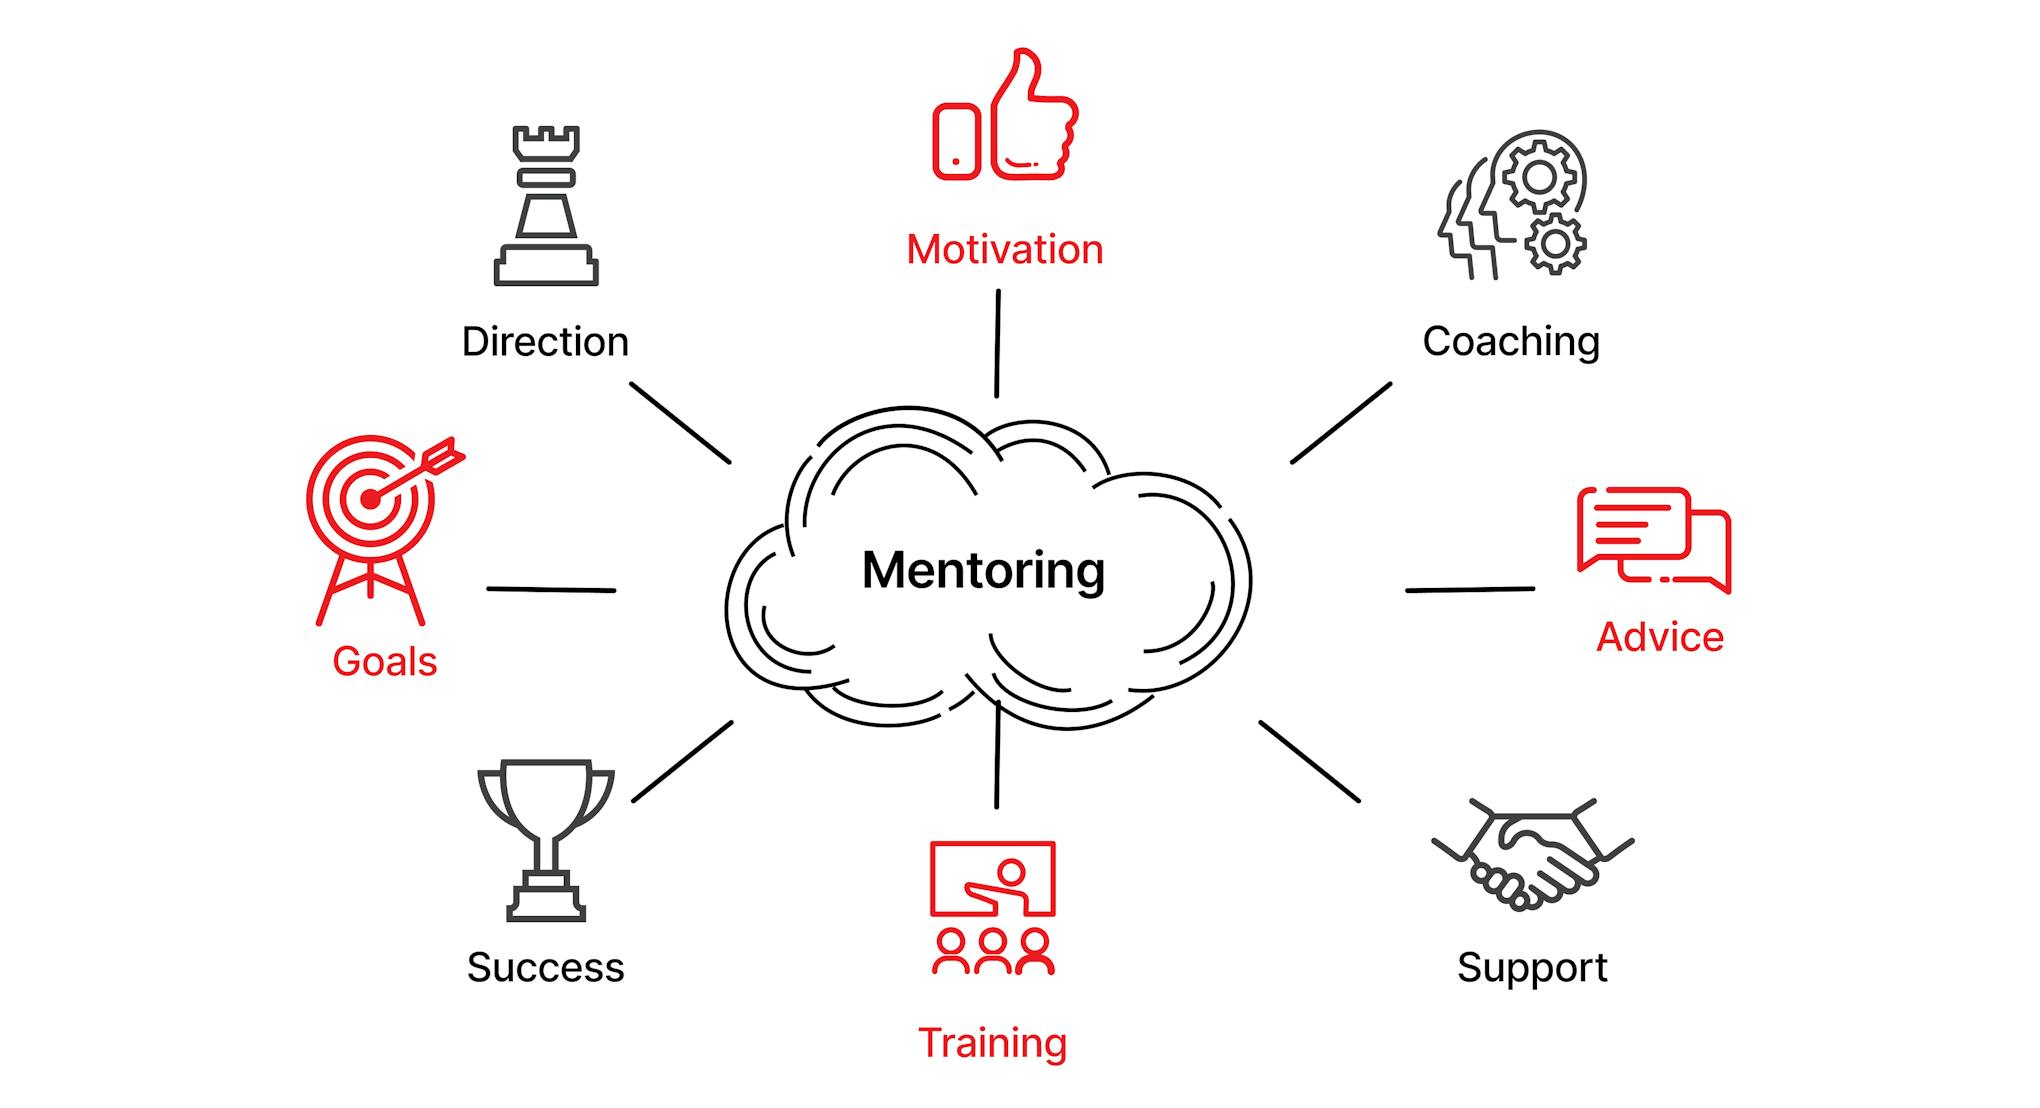 Coding Mentor: Reasons and Benefits of Developer’s Mentorship